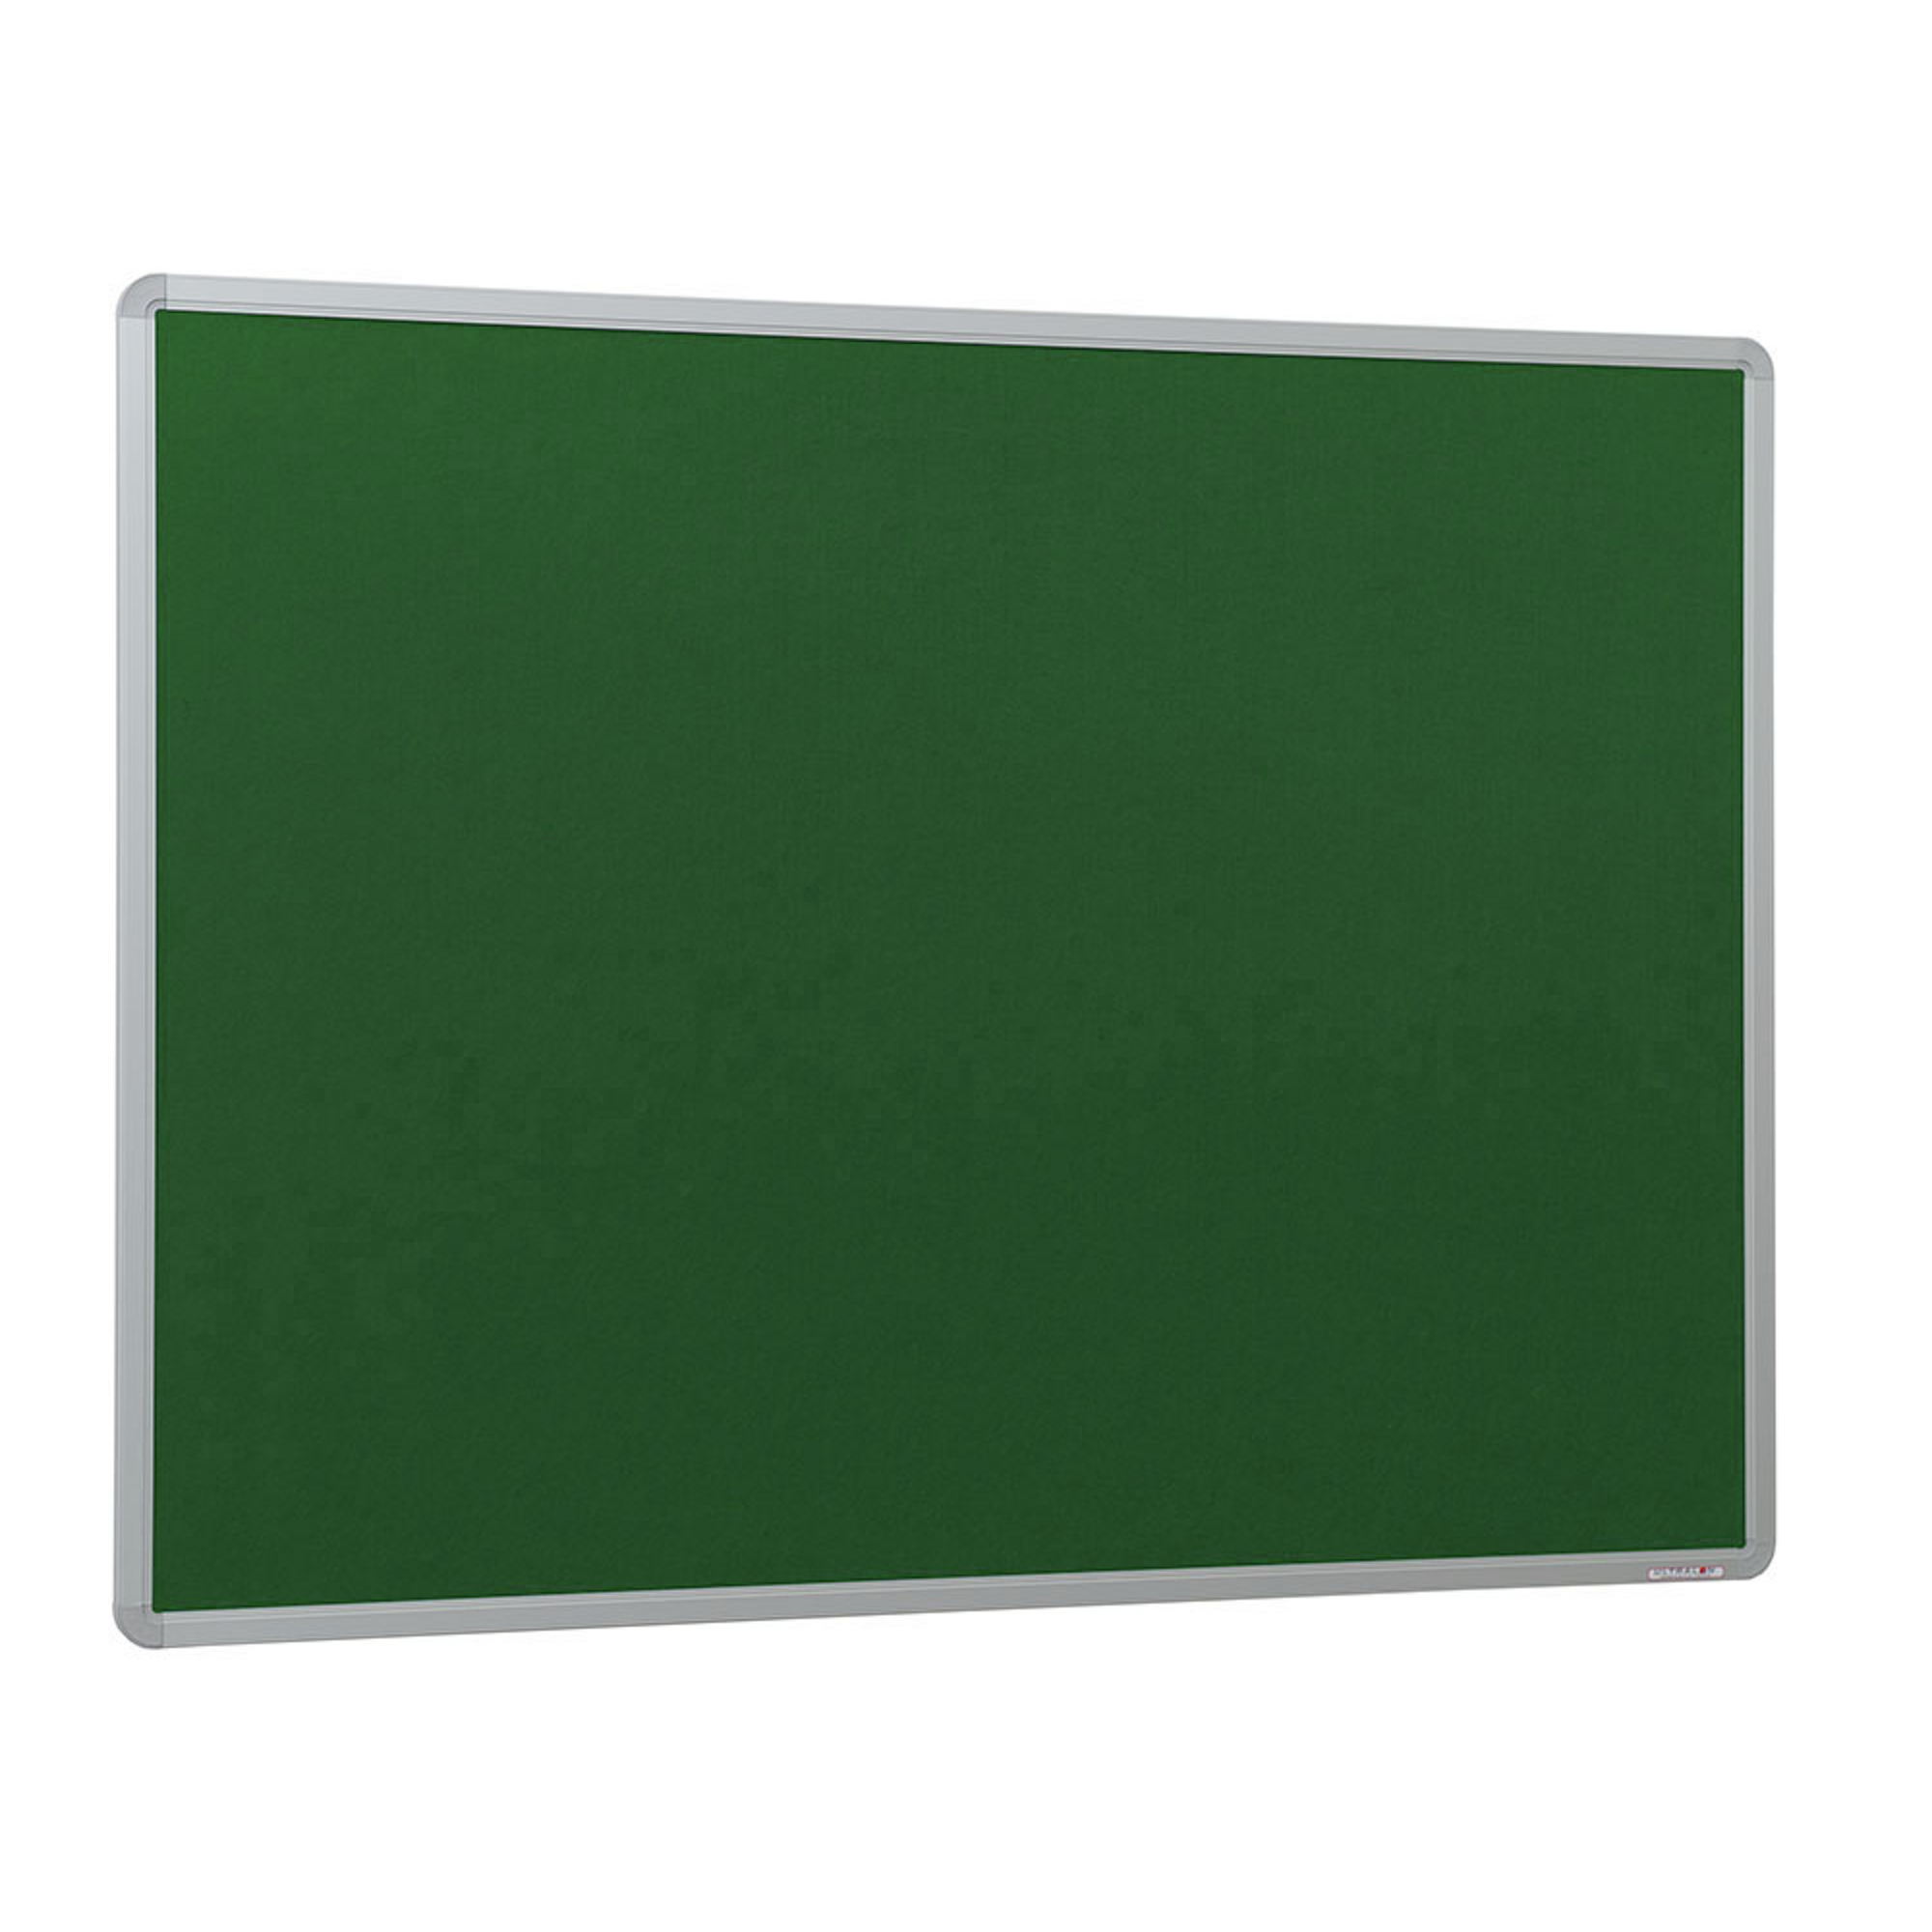 Alum Noticeboard 9x6 Green